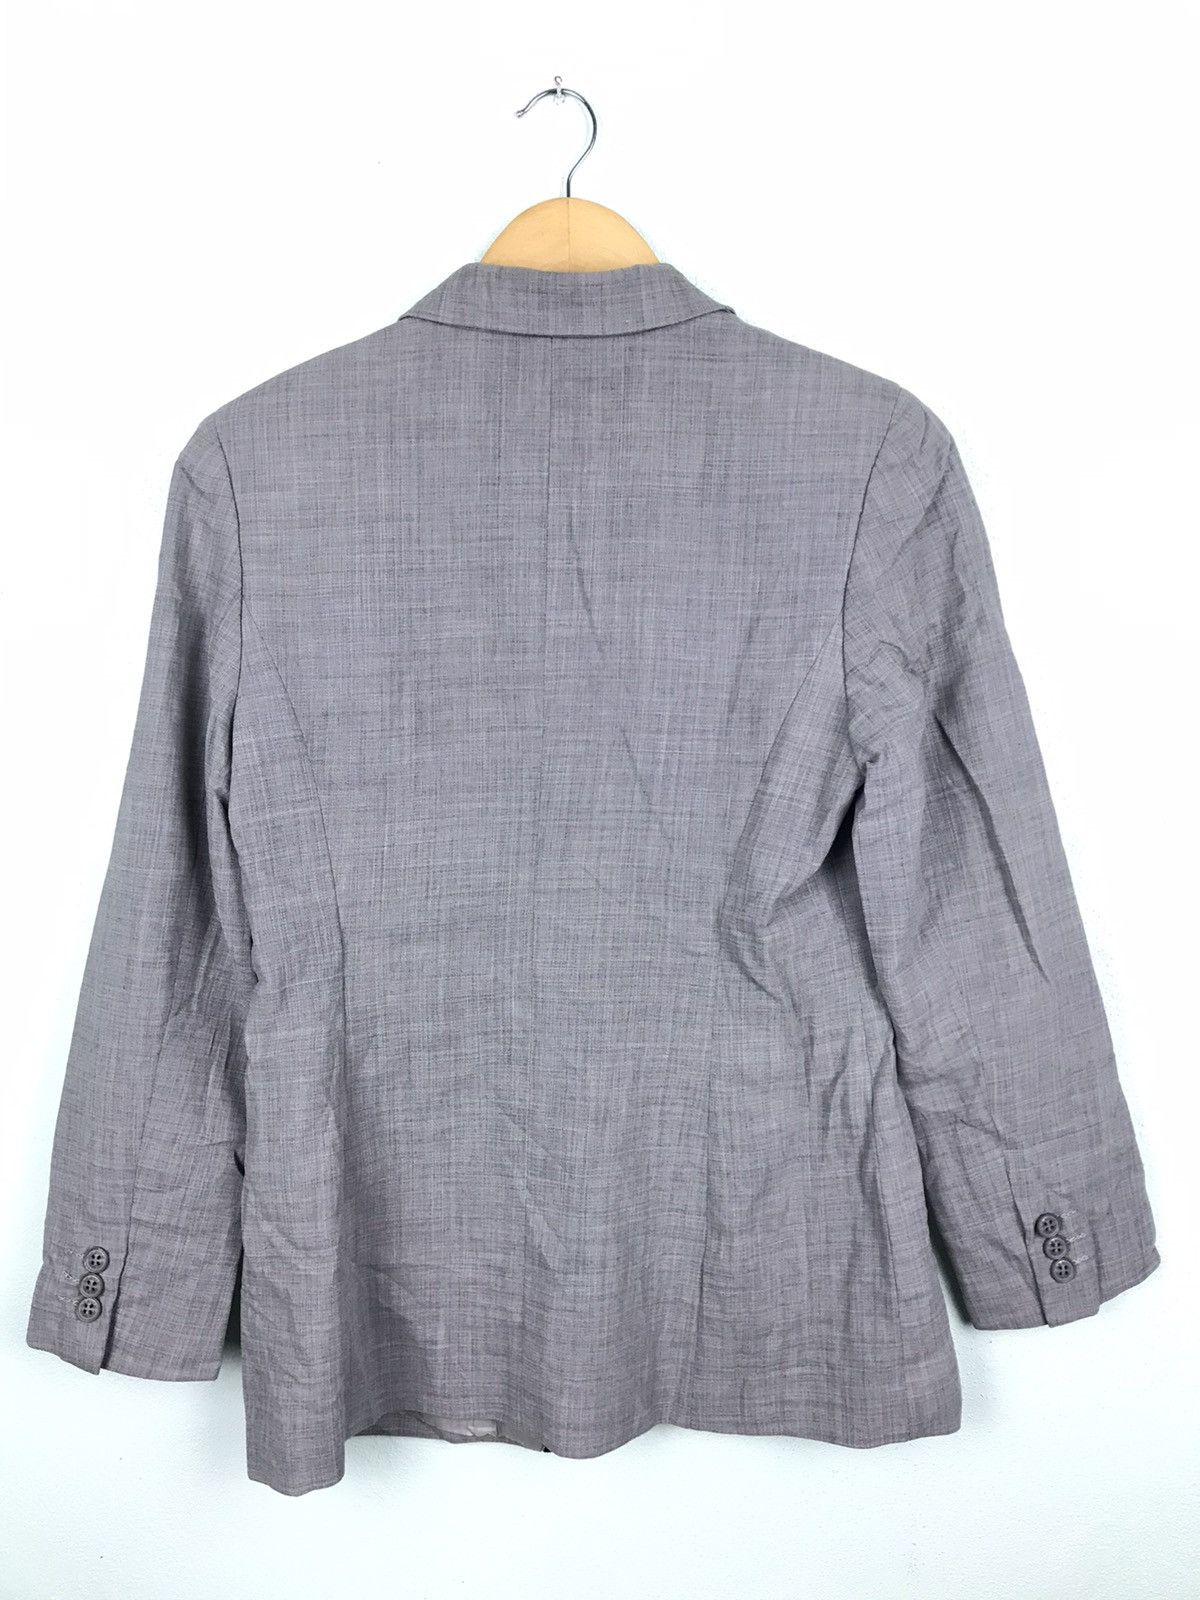 Lanvin la collection wool blazers jacket - gh1319 - 5